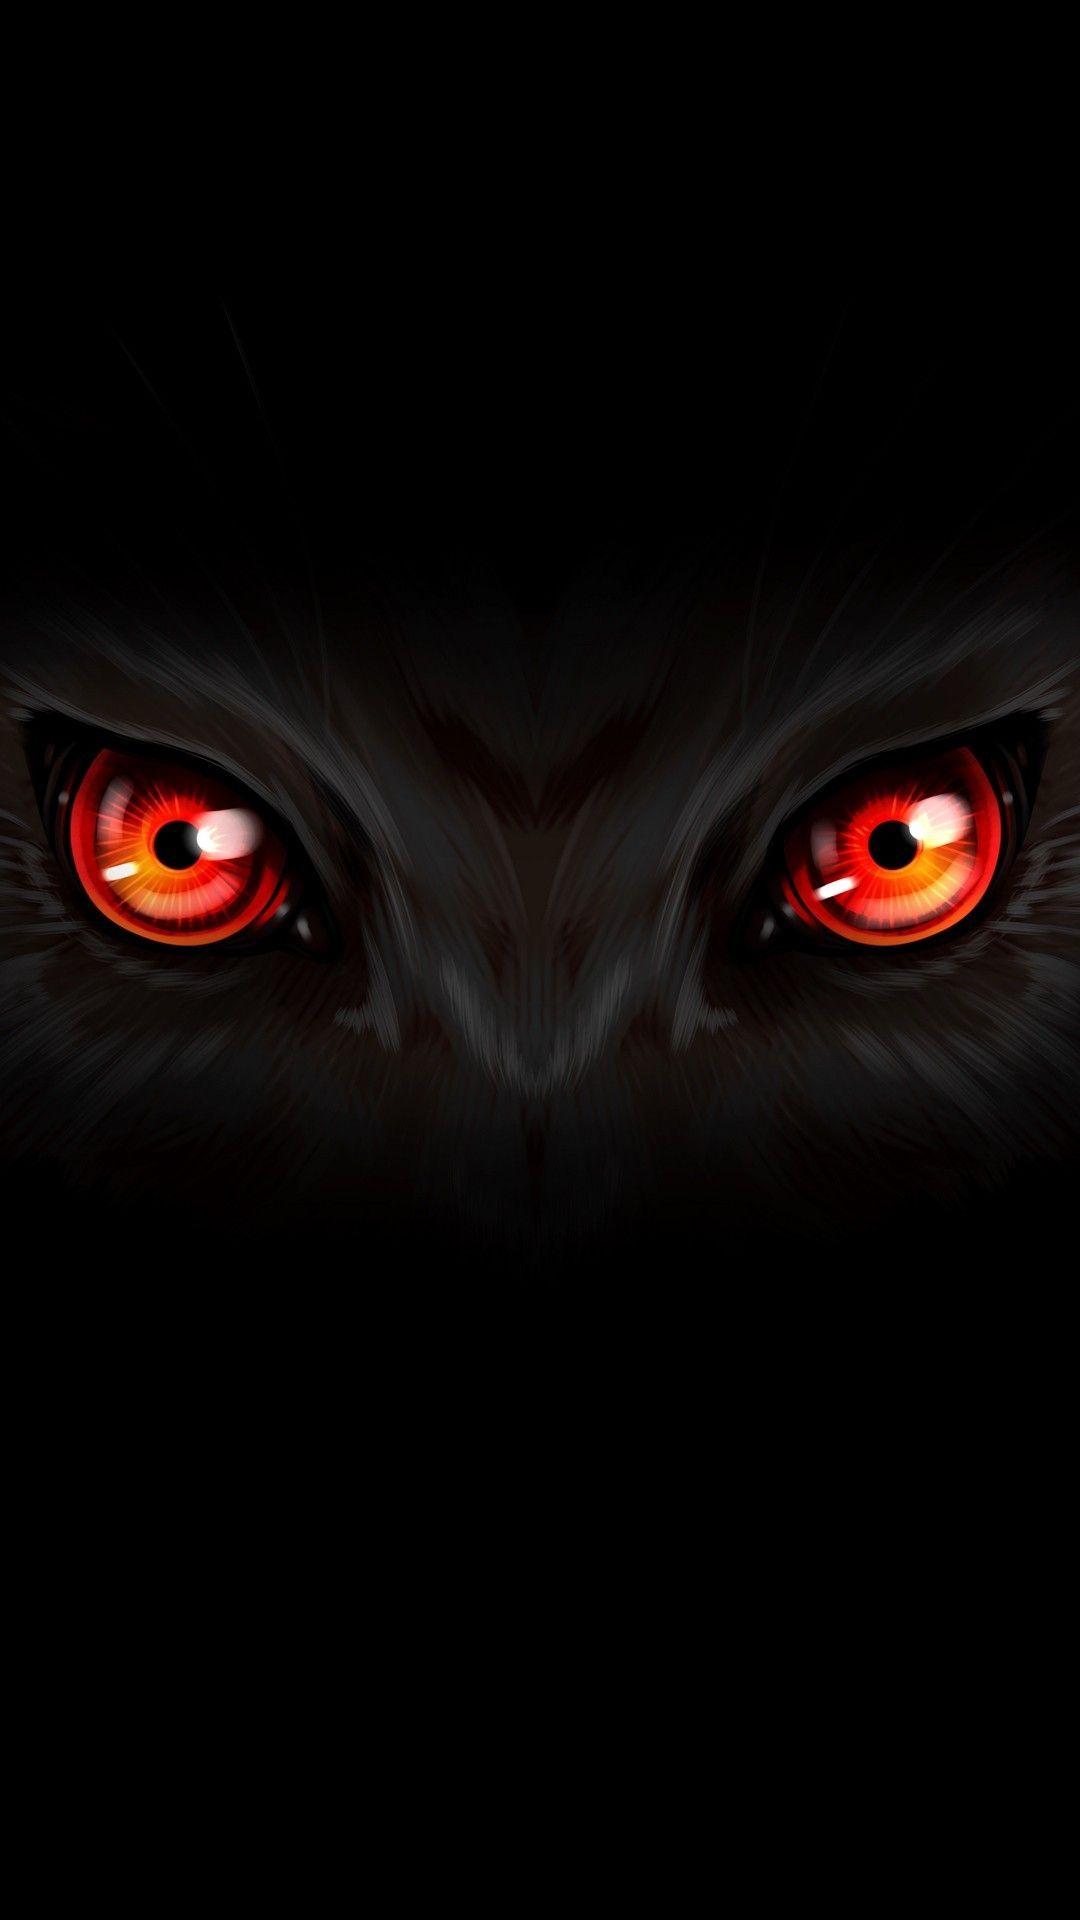 Intimidating Wolf Eyes Images